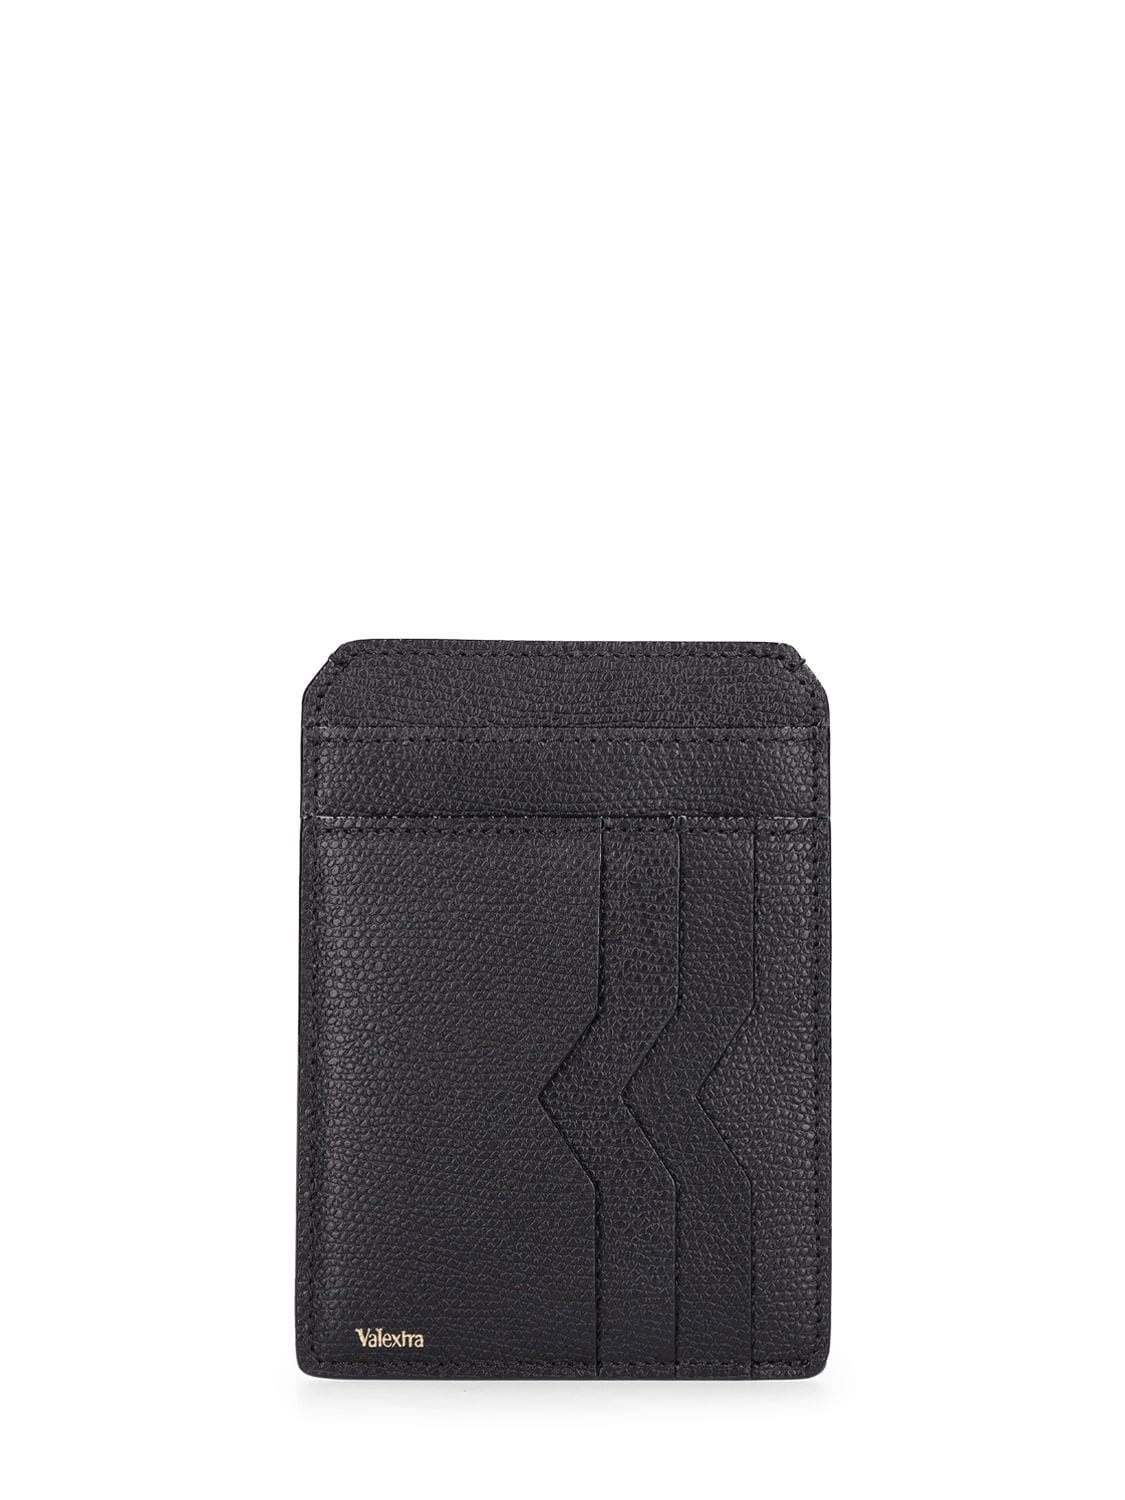 VALEXTRA Leather Credit Card Holder | Smart Closet